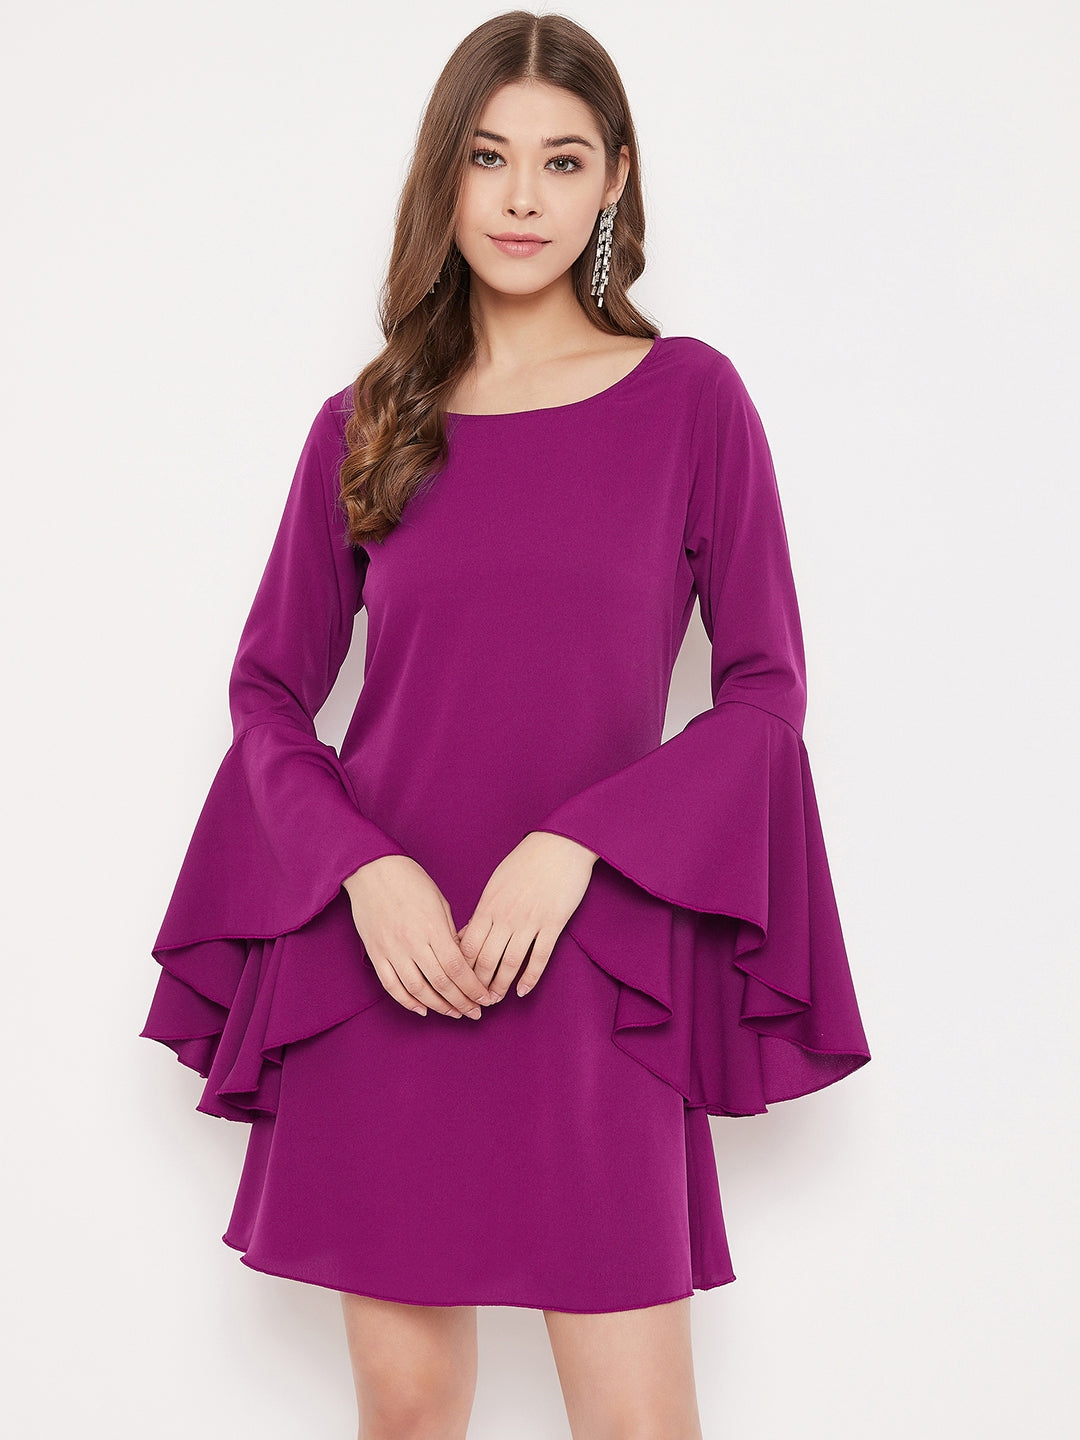 Berrylush Women Solid Purple Bell Sleeves A-Line Mini Dress